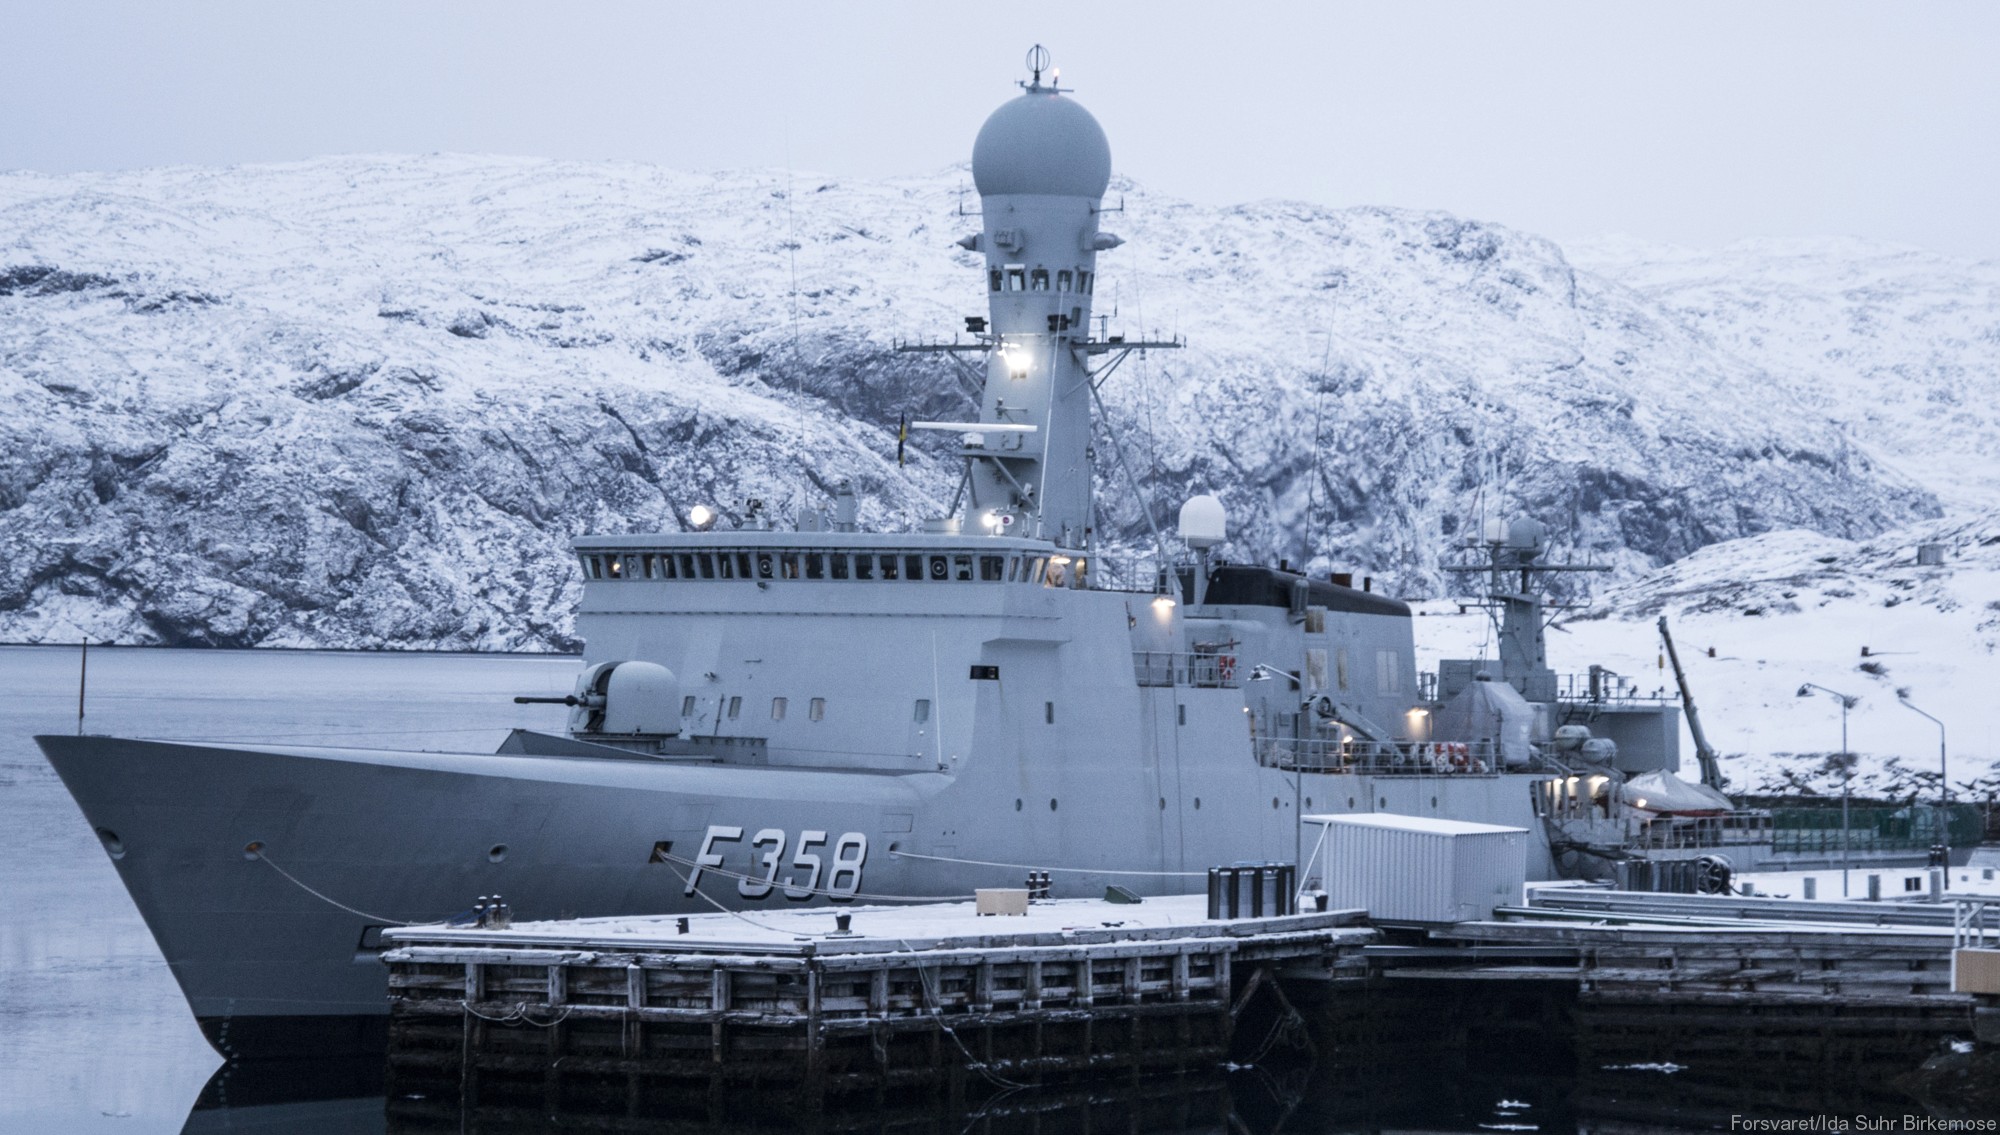 f-358 hdms triton thetis class ocean patrol frigate royal danish navy kongelige danske marine kdm inspektionsskibet 08